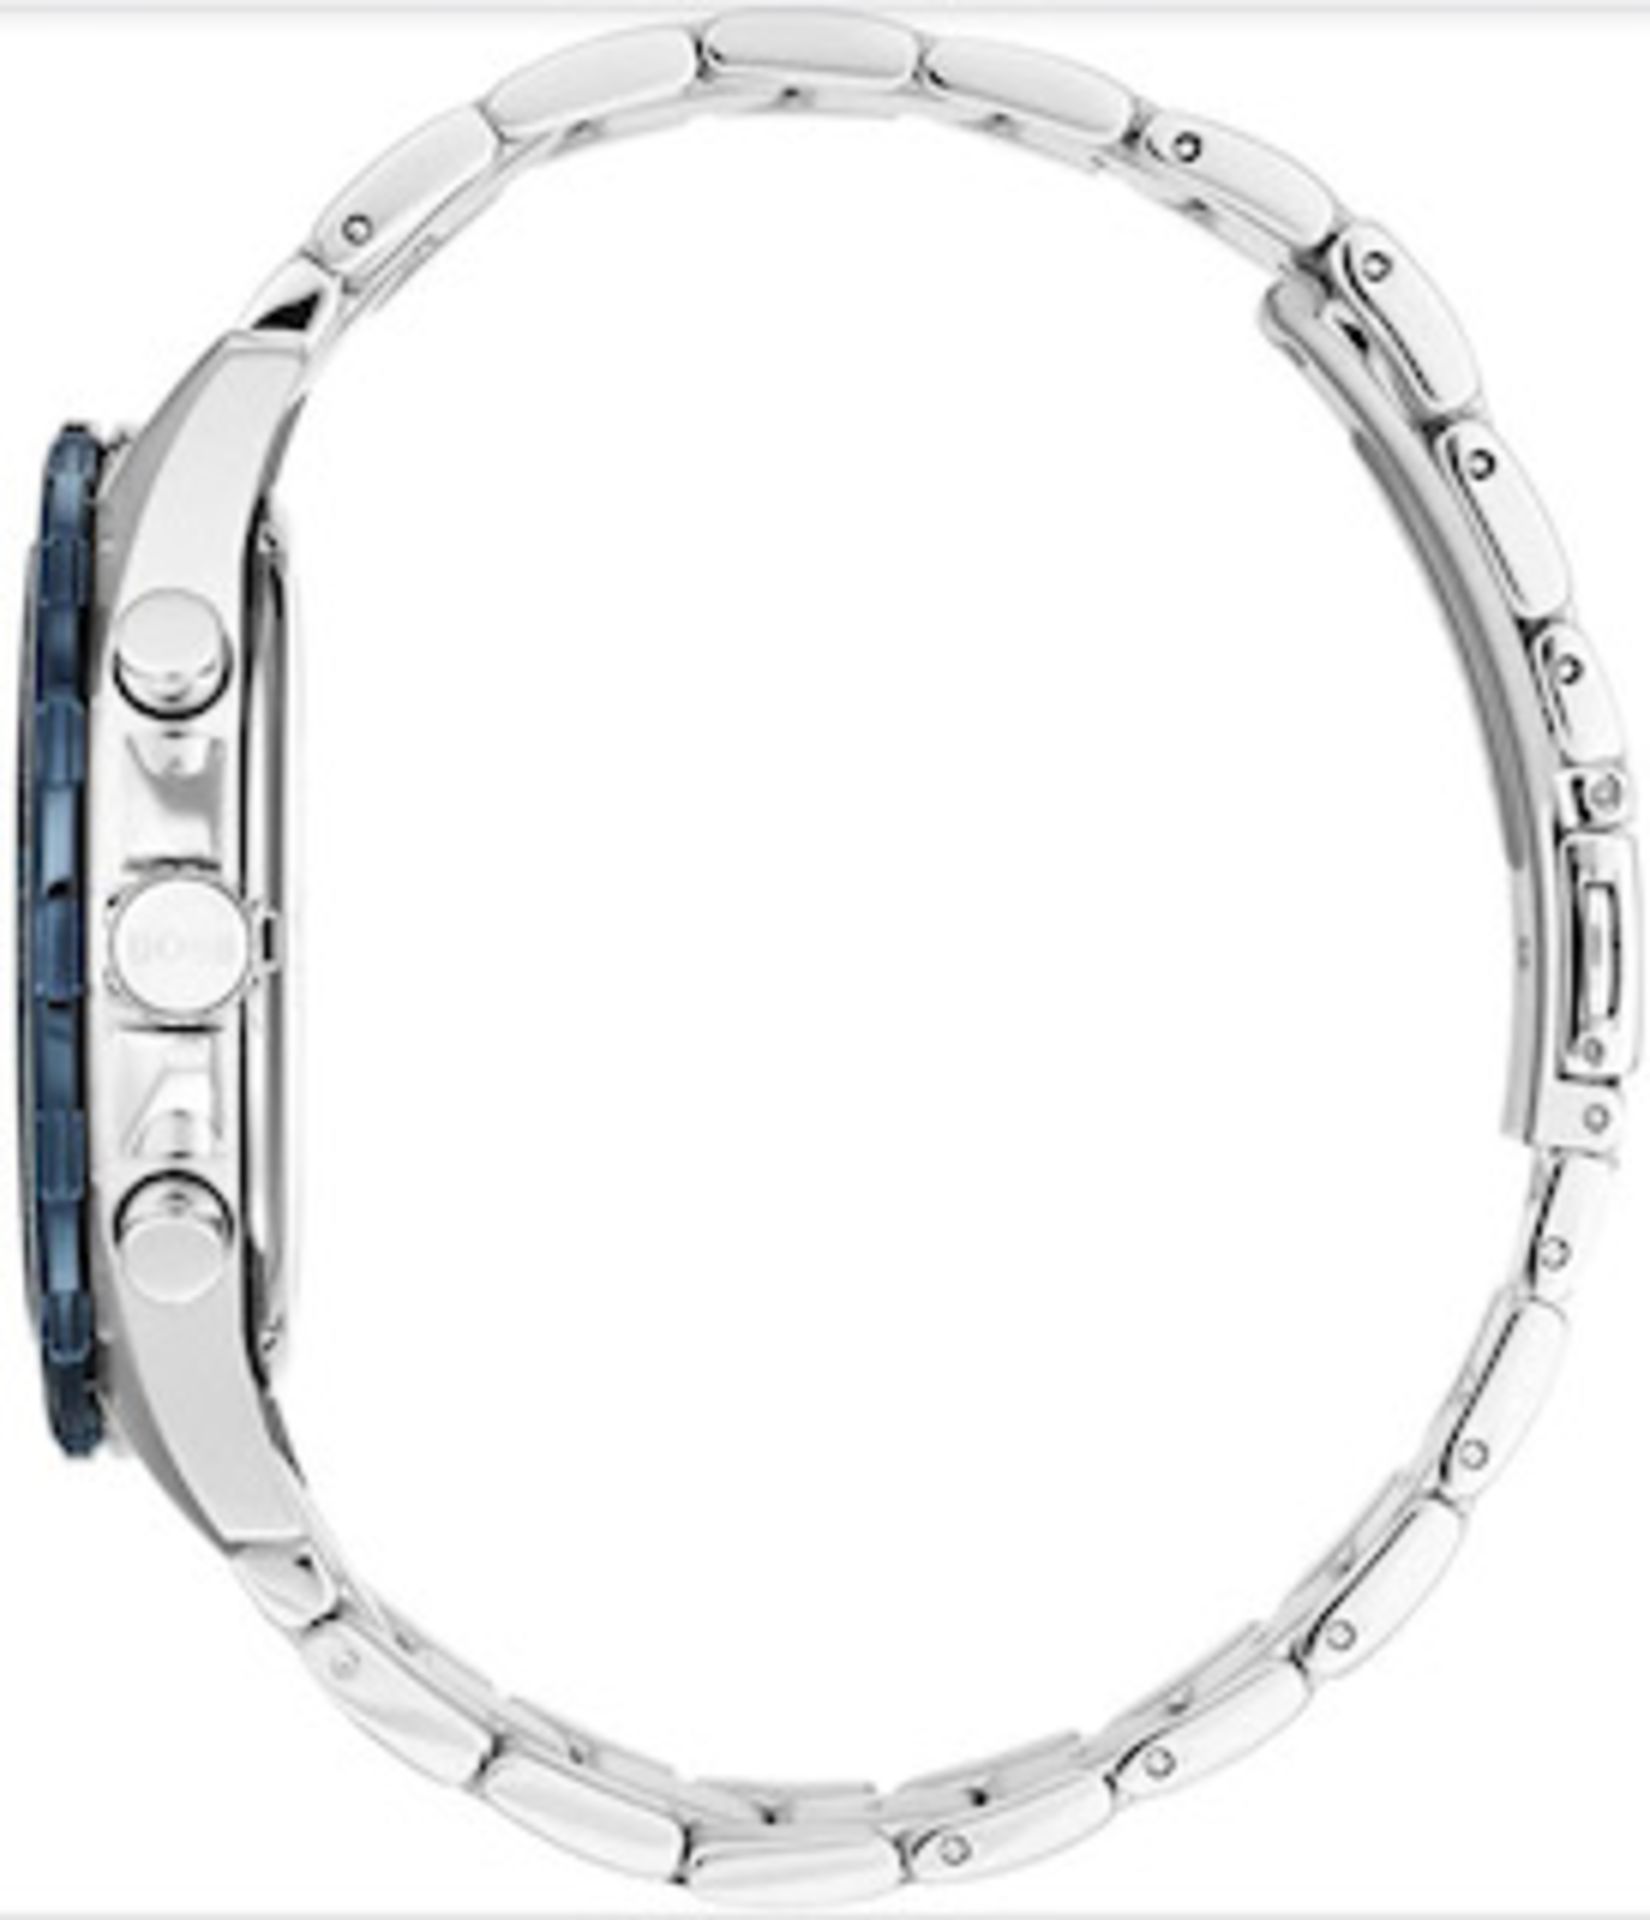 Hugo Boss Men's Intensity Silver Bracelet Chronograph Watch 1513665 - Image 3 of 5